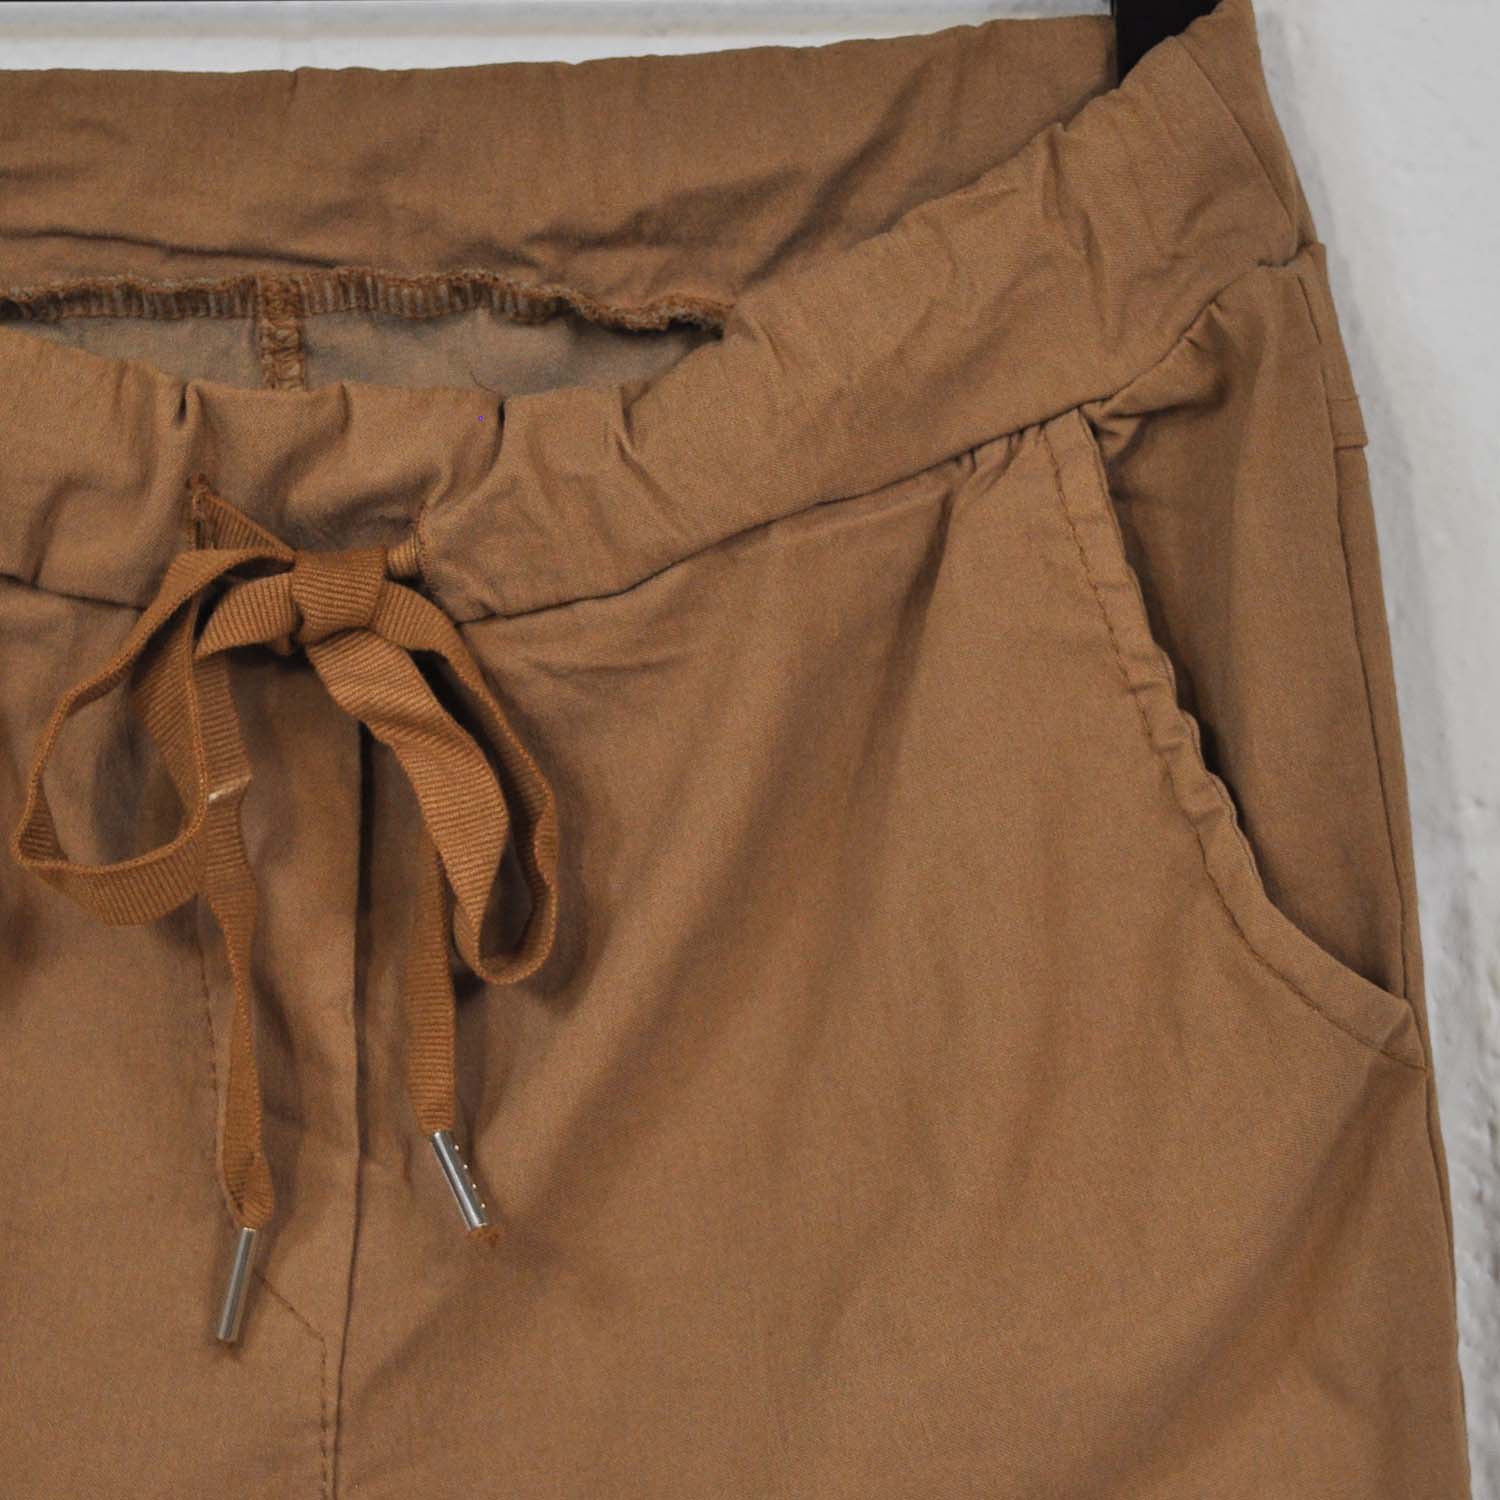 Camel cargo pants